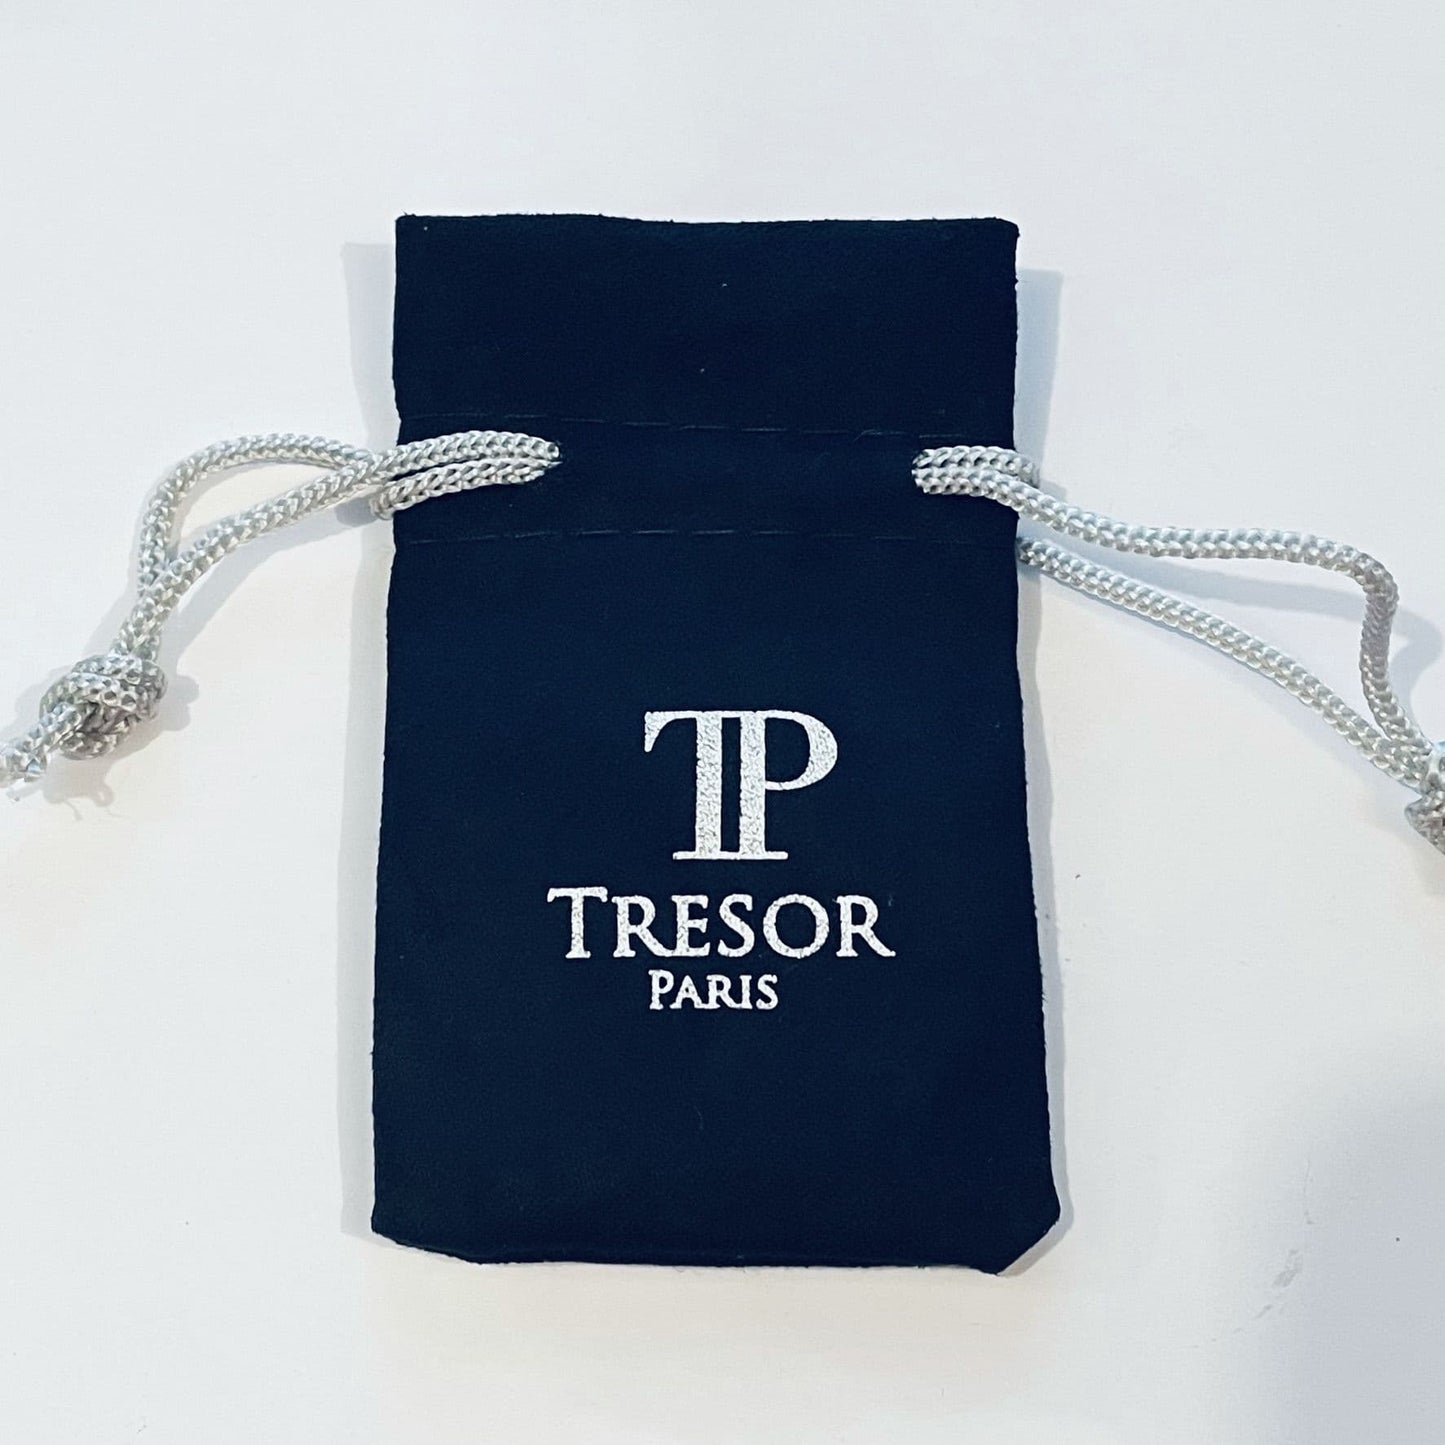 Tresor Paris 10mm White Turquoise Round Stretchy Bracelet